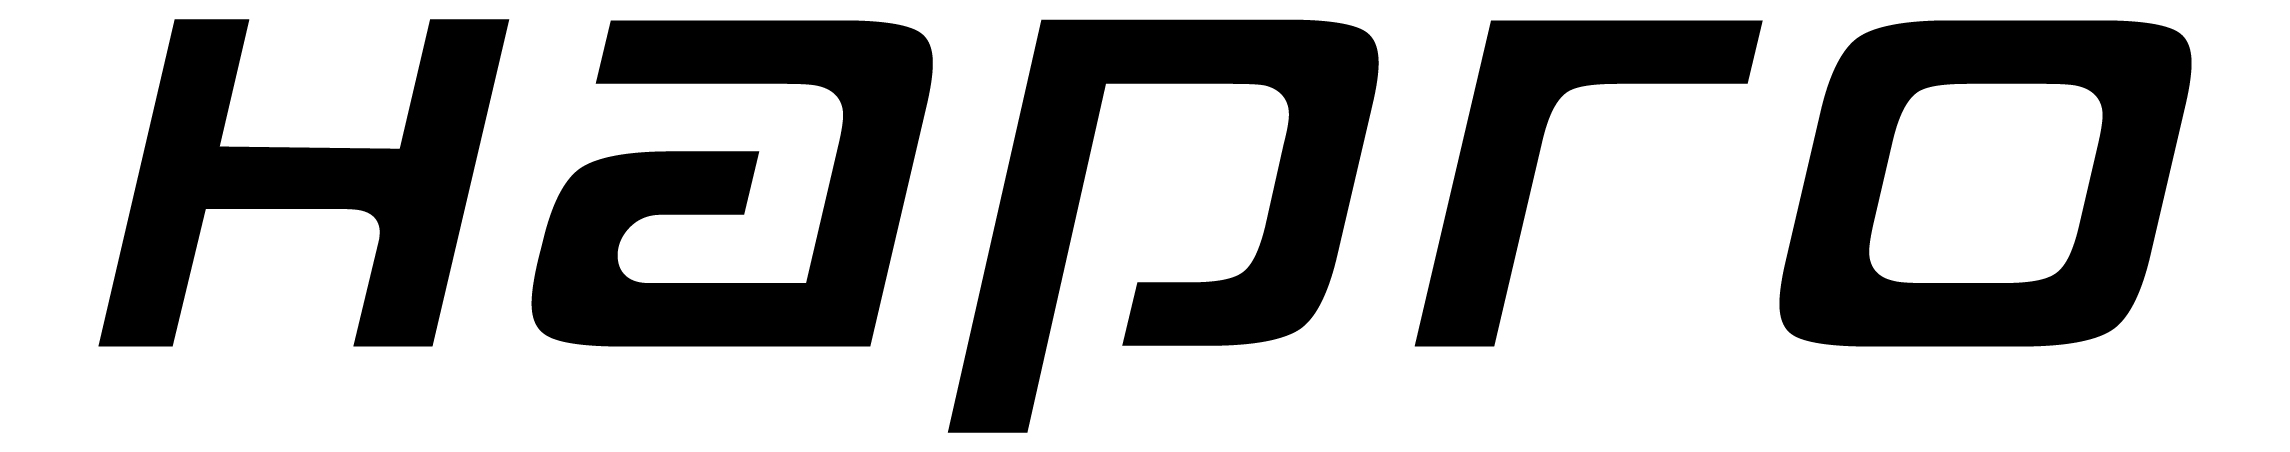 Hapro Logo